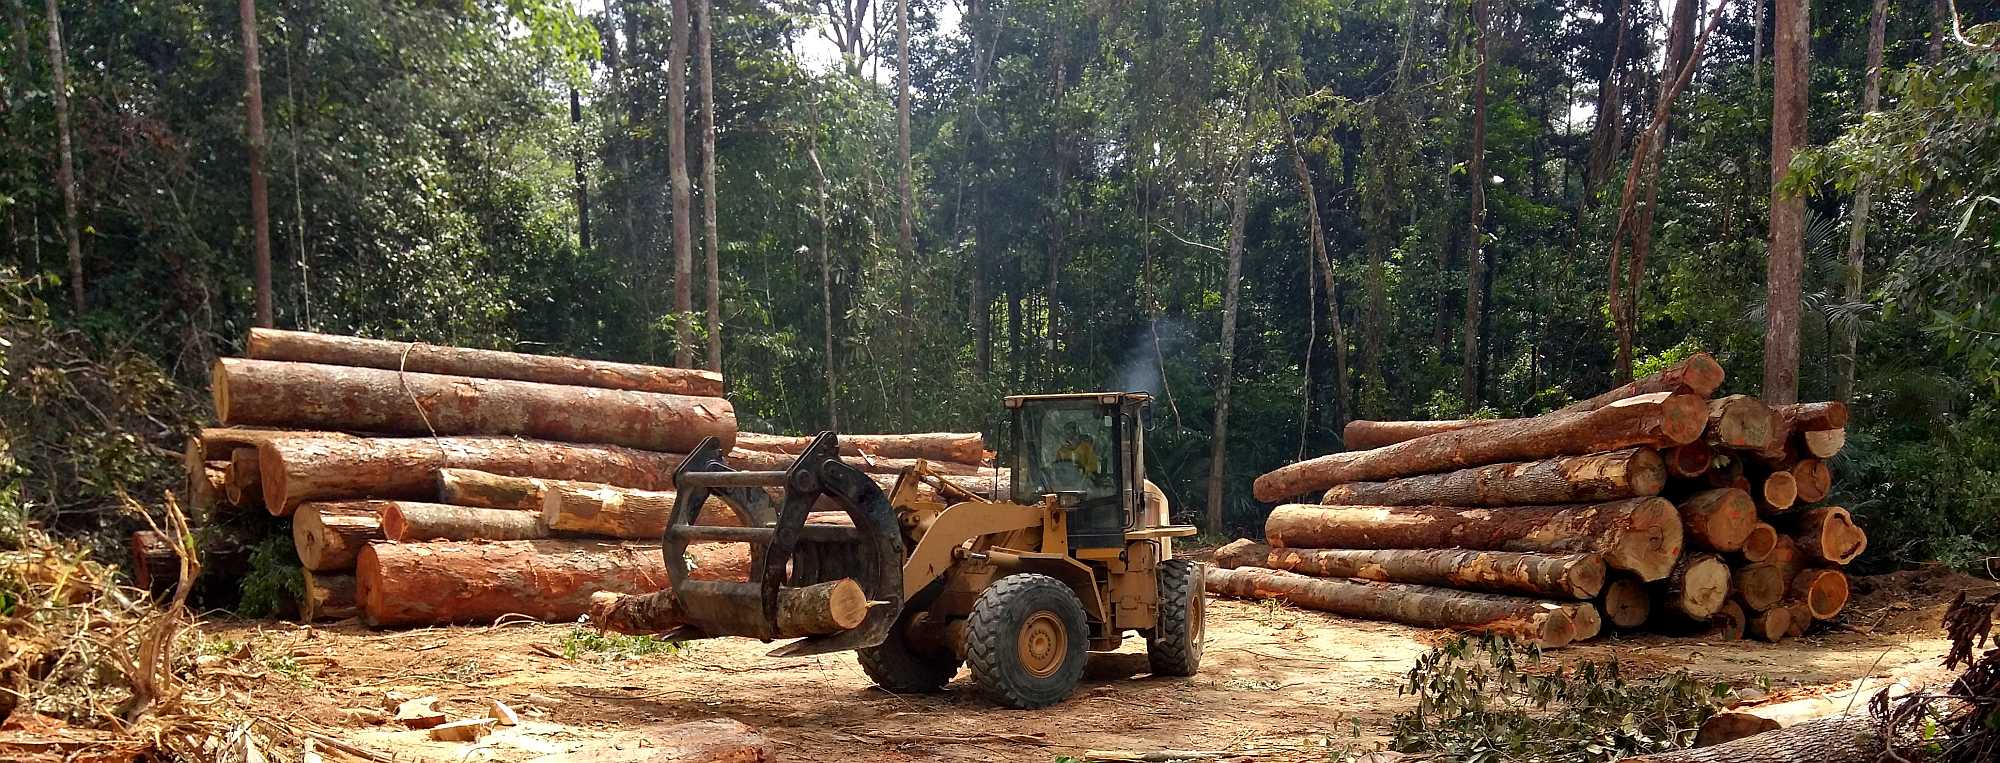 Cut trees in the Amazon. Tarcisio Schnaider / shutterstock